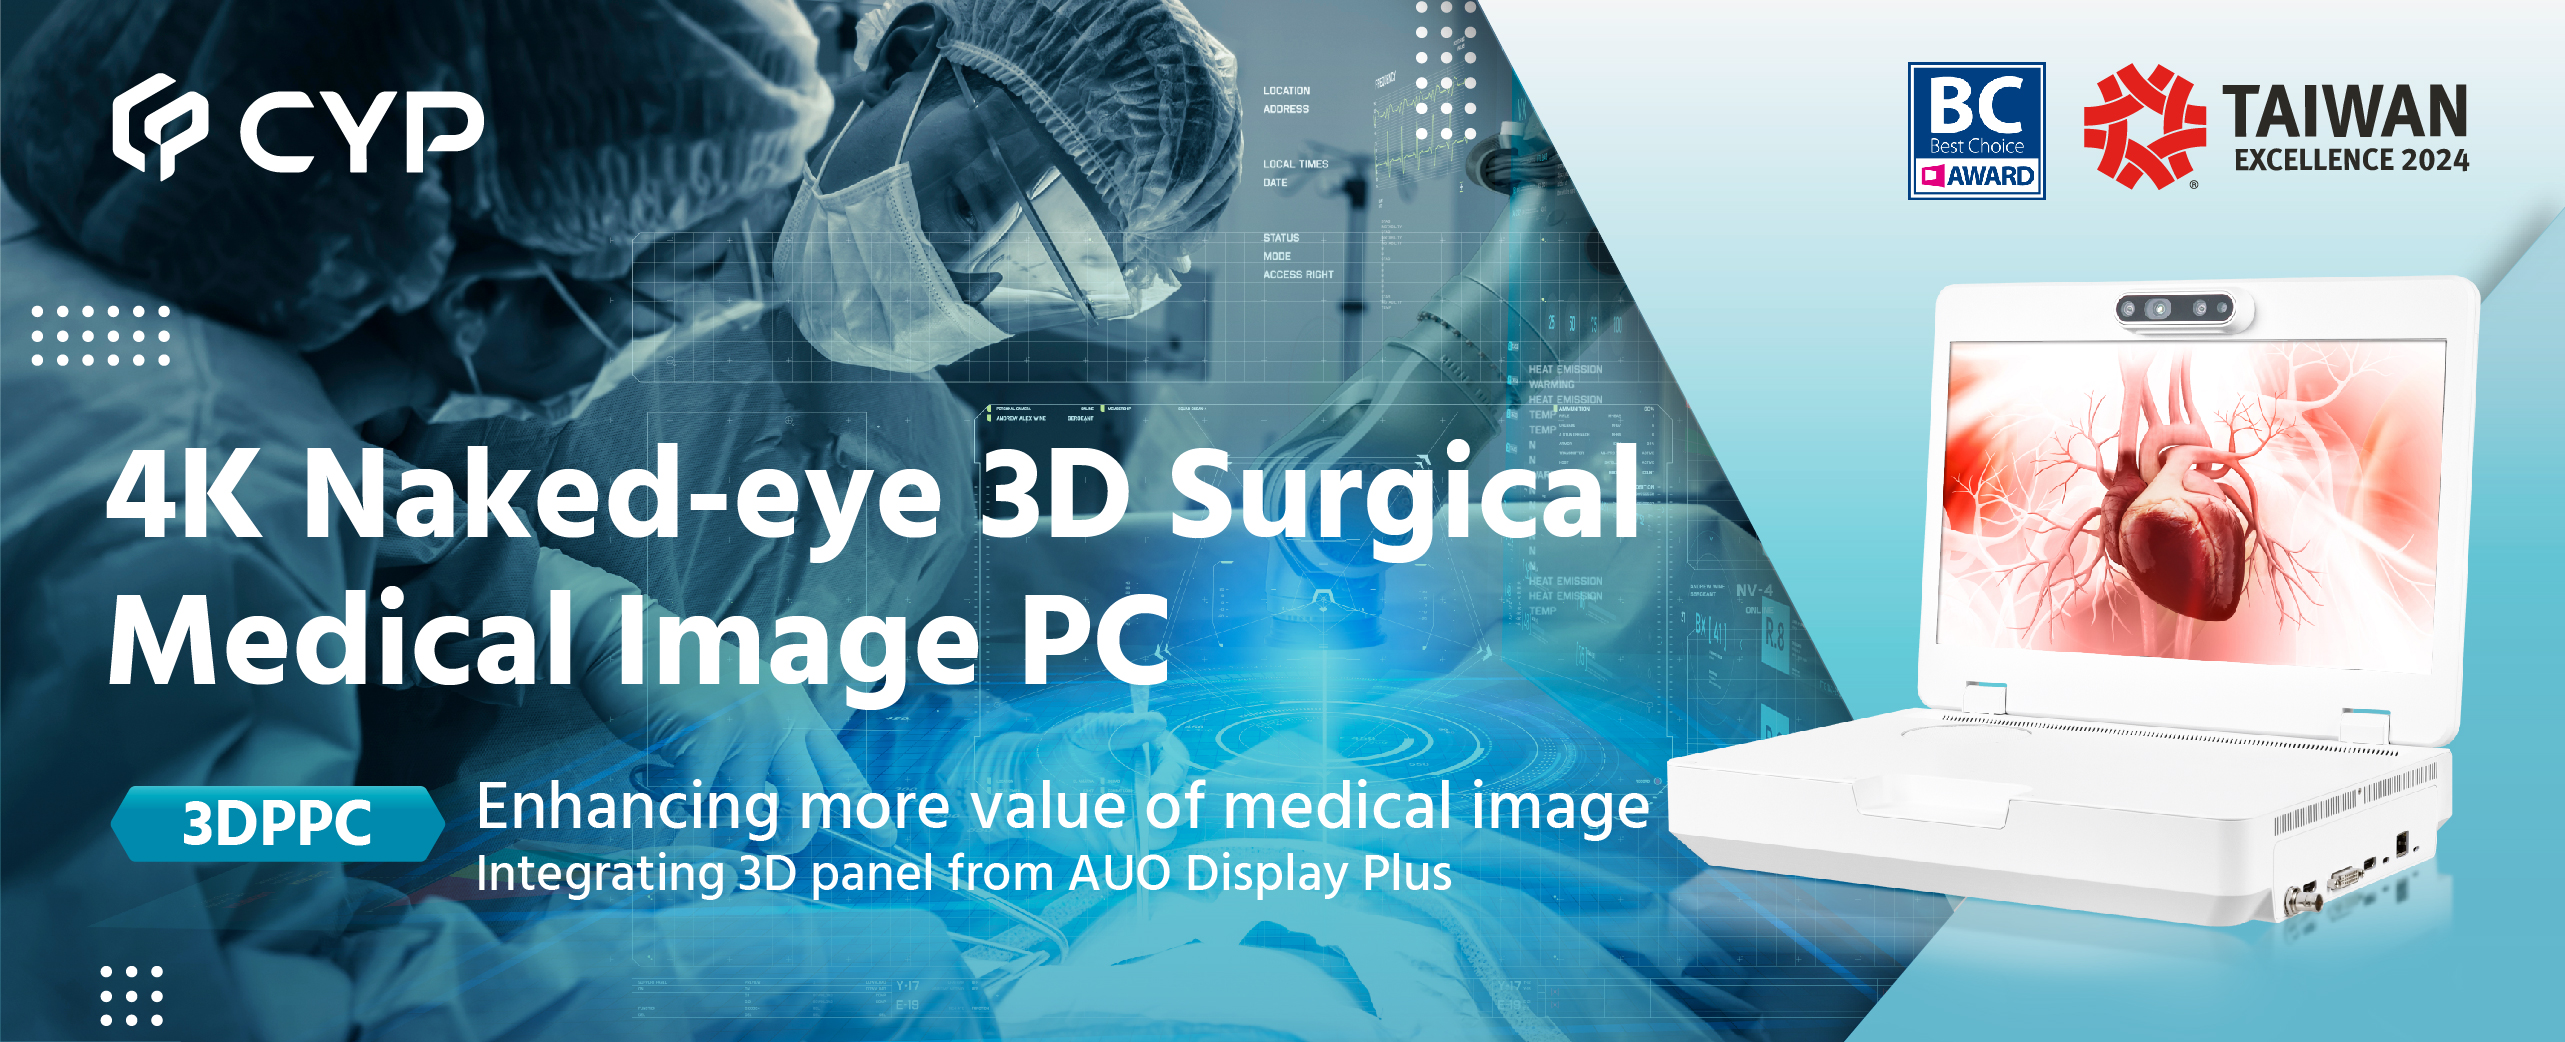 4K Naked-eye 3D Surgical Medical Image PC